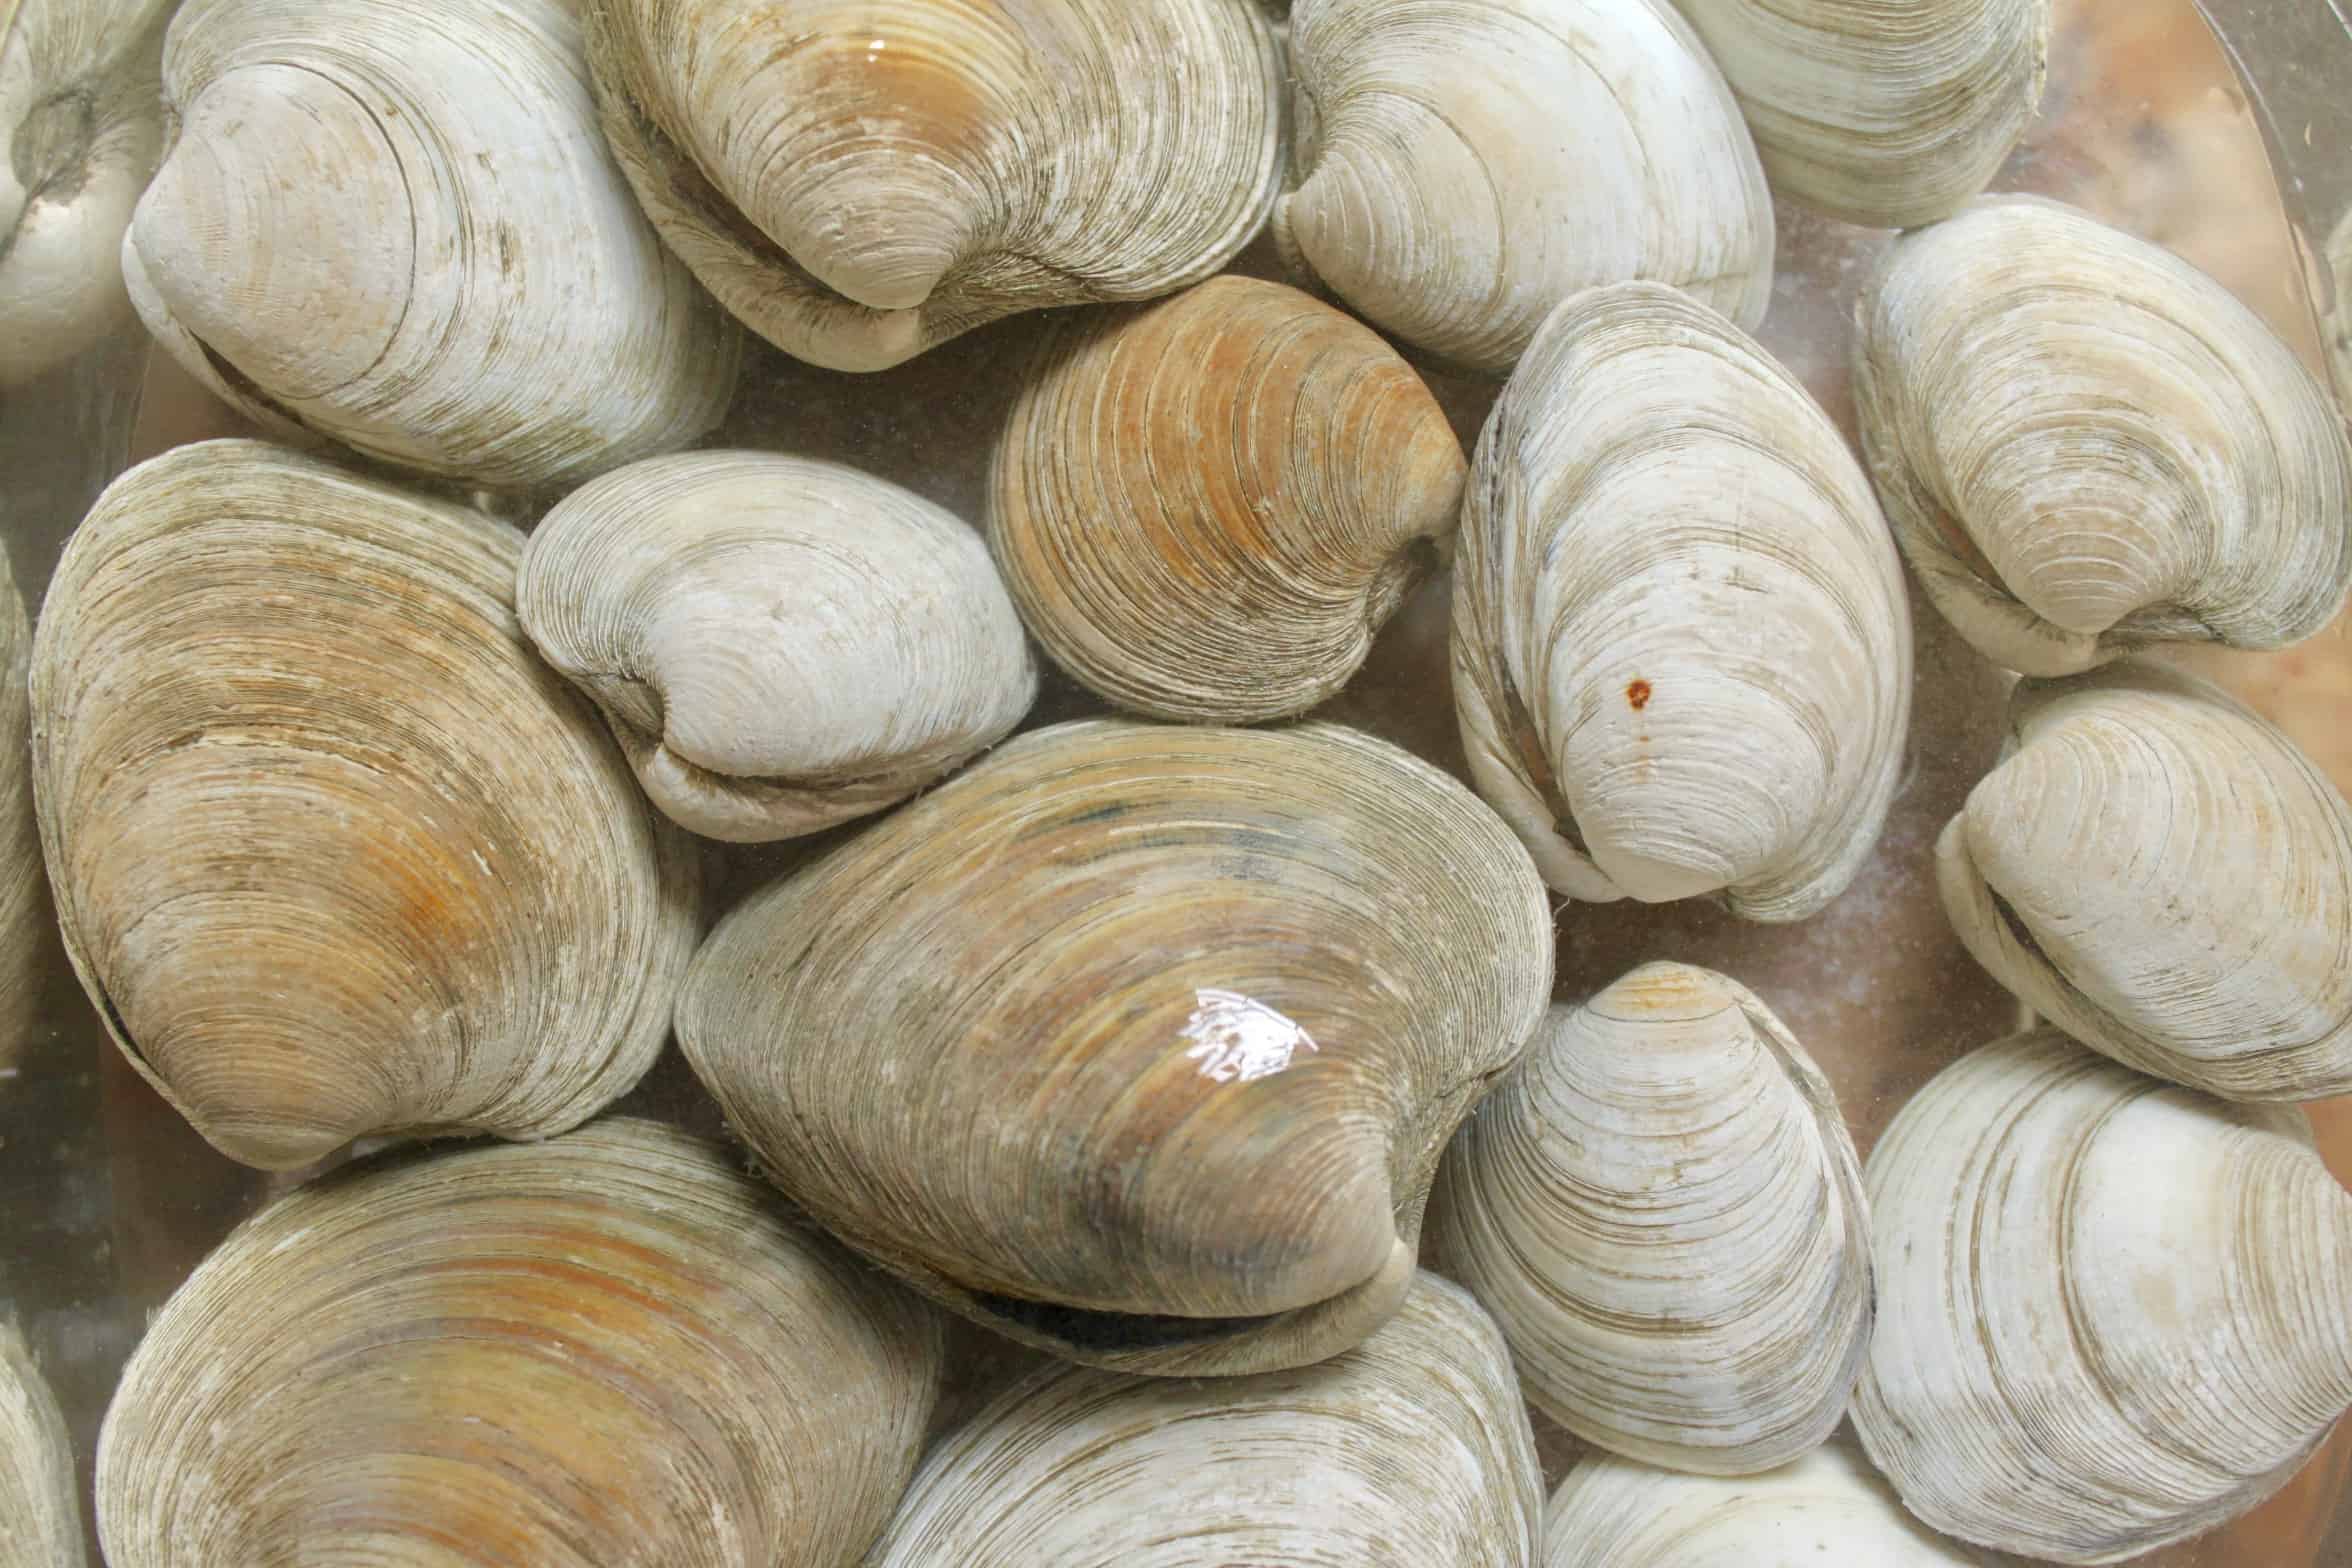 soaking clams